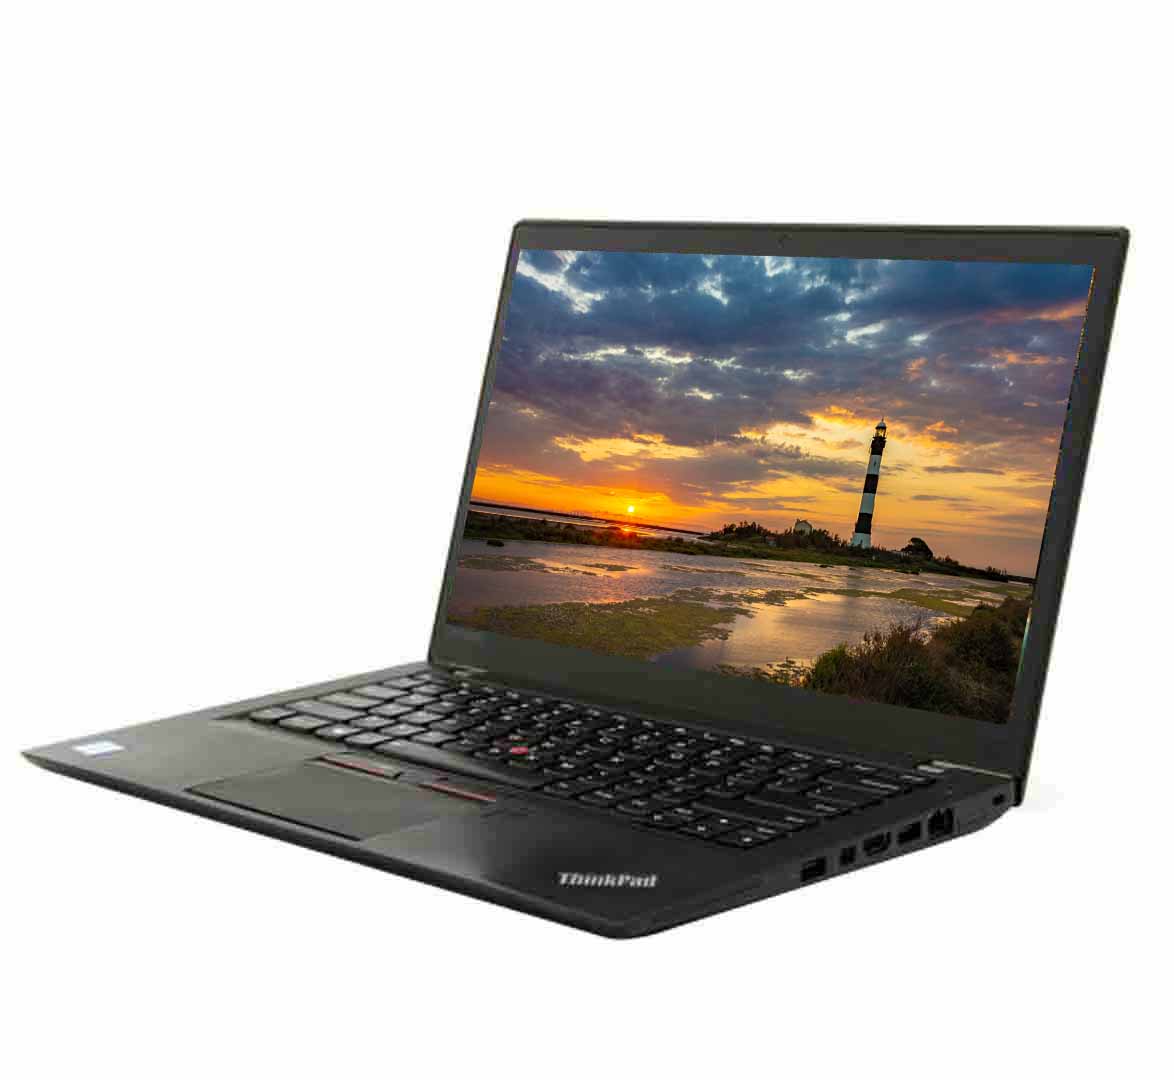 Lenovo ThinkPad T460s Ultrabook Laptop, Intel Core i5-6th Gen CPU, 8GB RAM, 512GB SSD, 14.1 inch Touchscreen, Windows 10 Pro